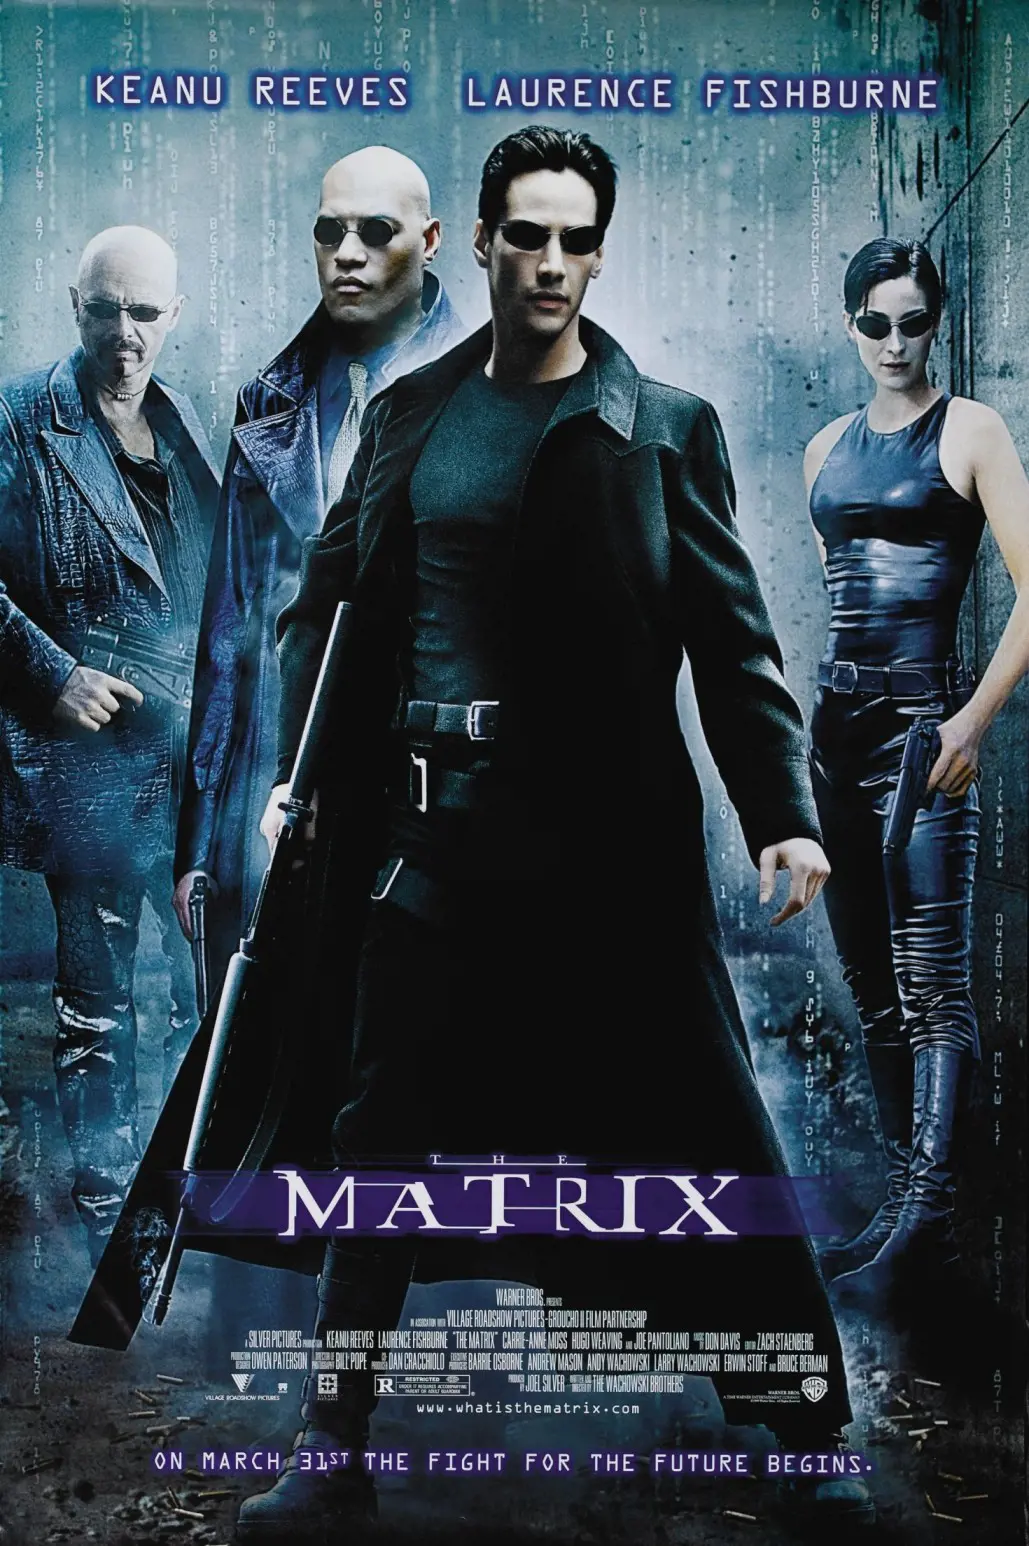 The Matrix has won 4 Oscars including Academy Awards USA 2000